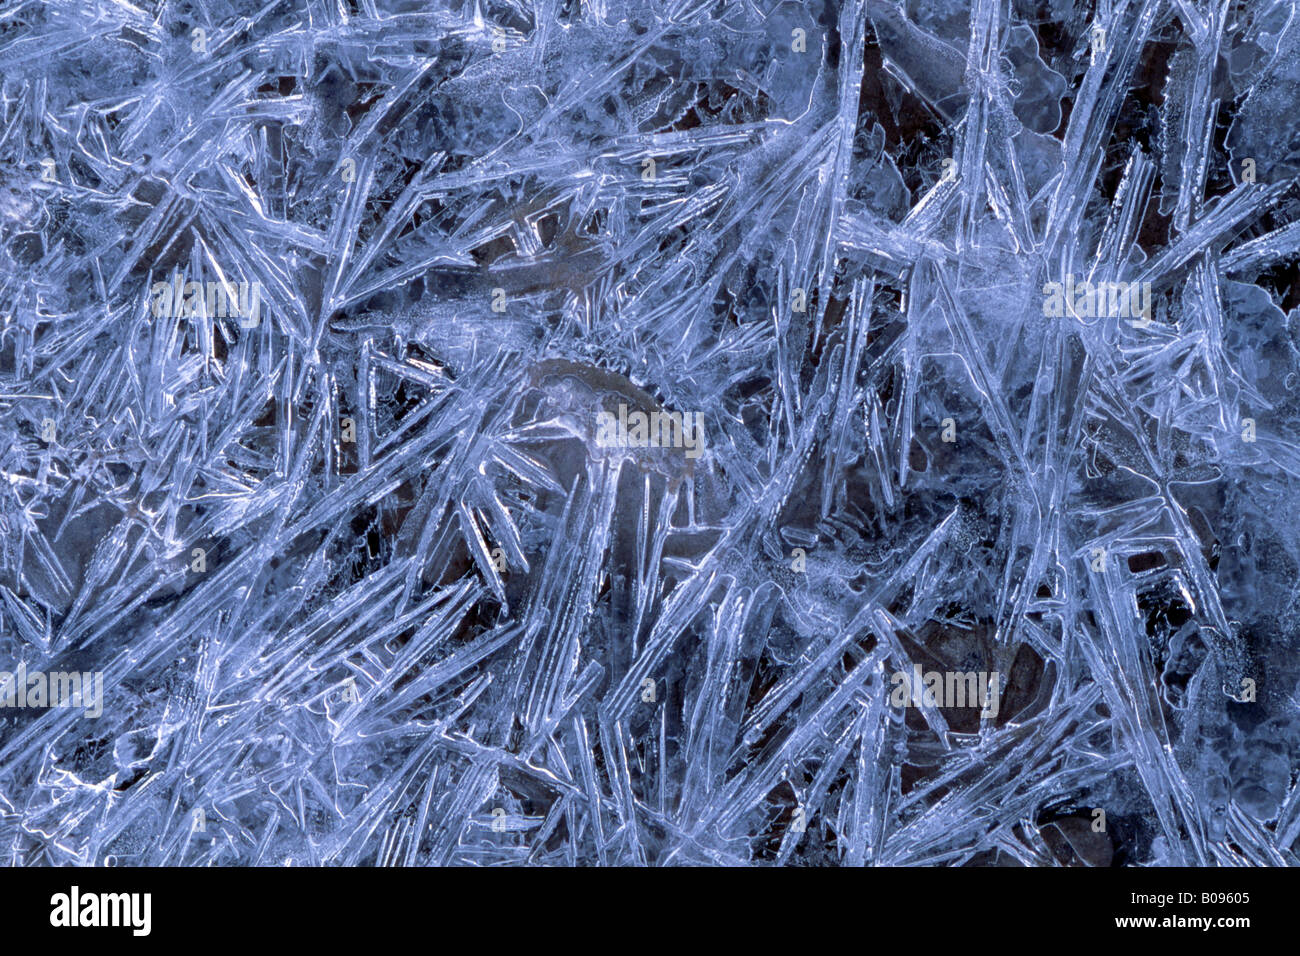 Ice crystal formations, Inn, Schwaz, Tyrol, Austria, Europe Stock Photo